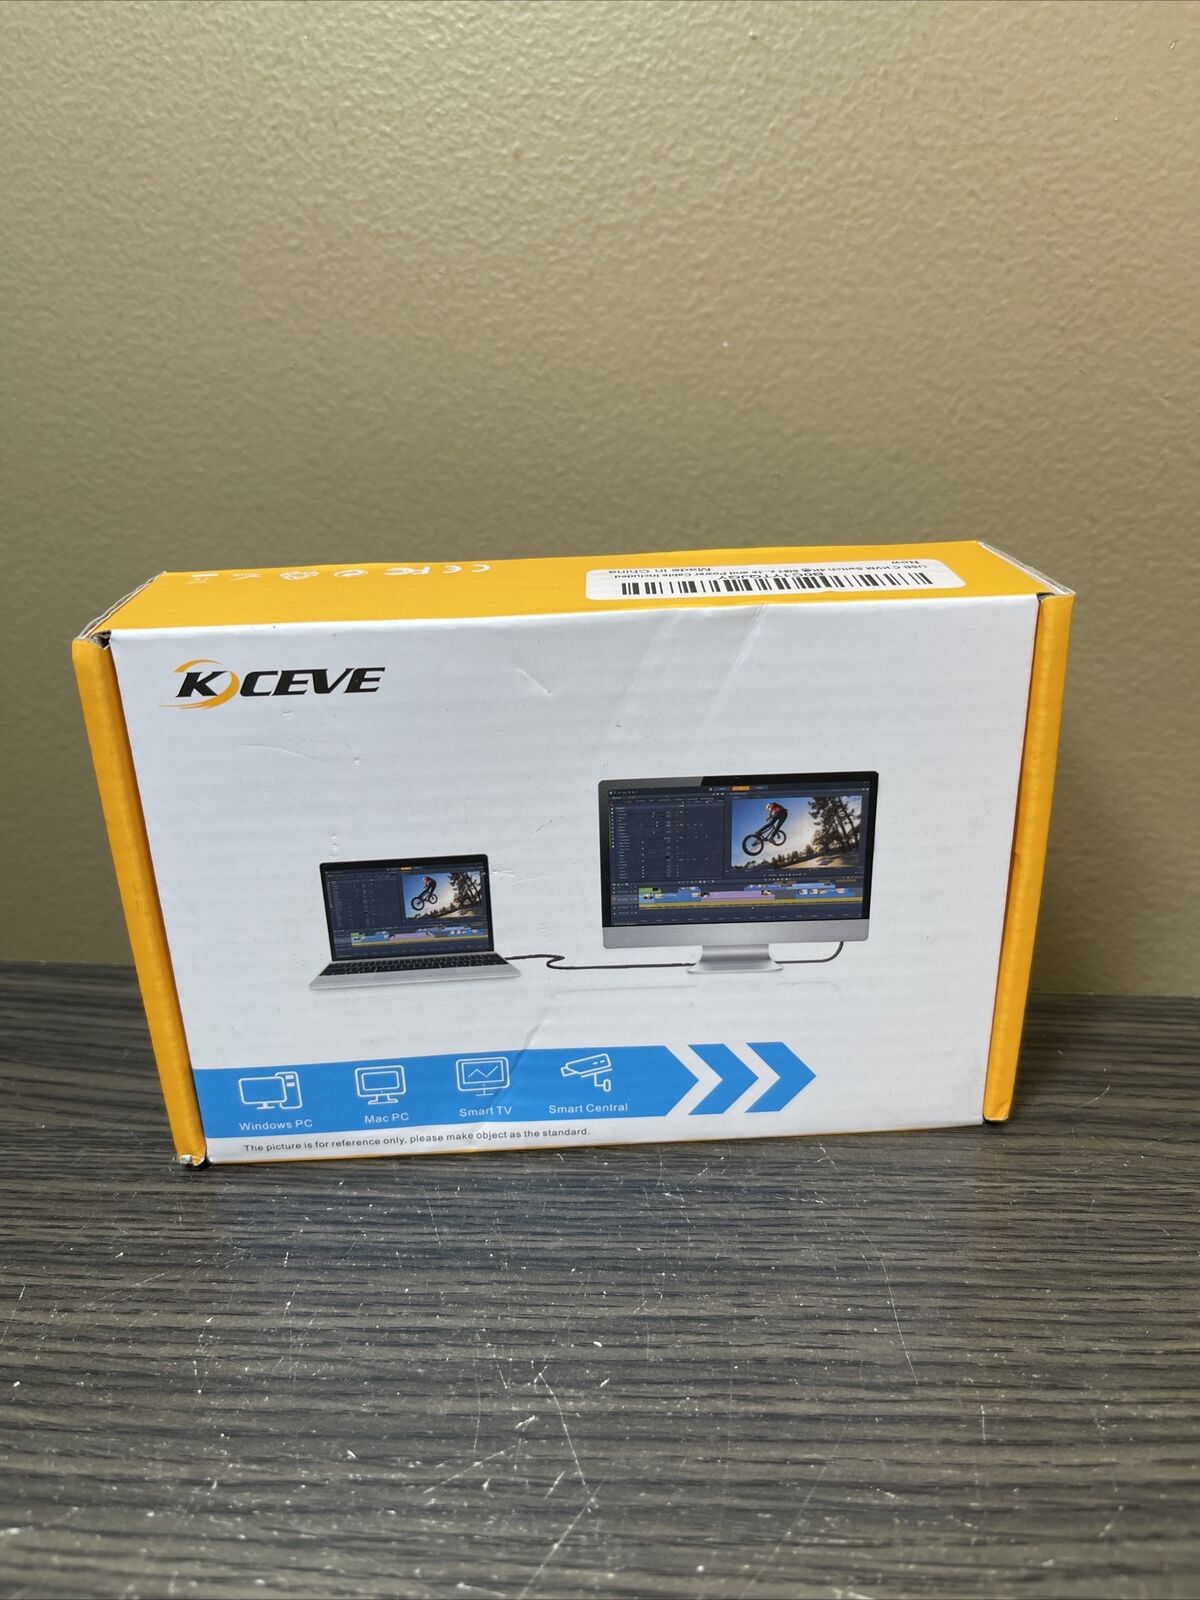 Kceve 2 Port USB C To HDMI KVM Switch Kc-c201h 4K 60hz New